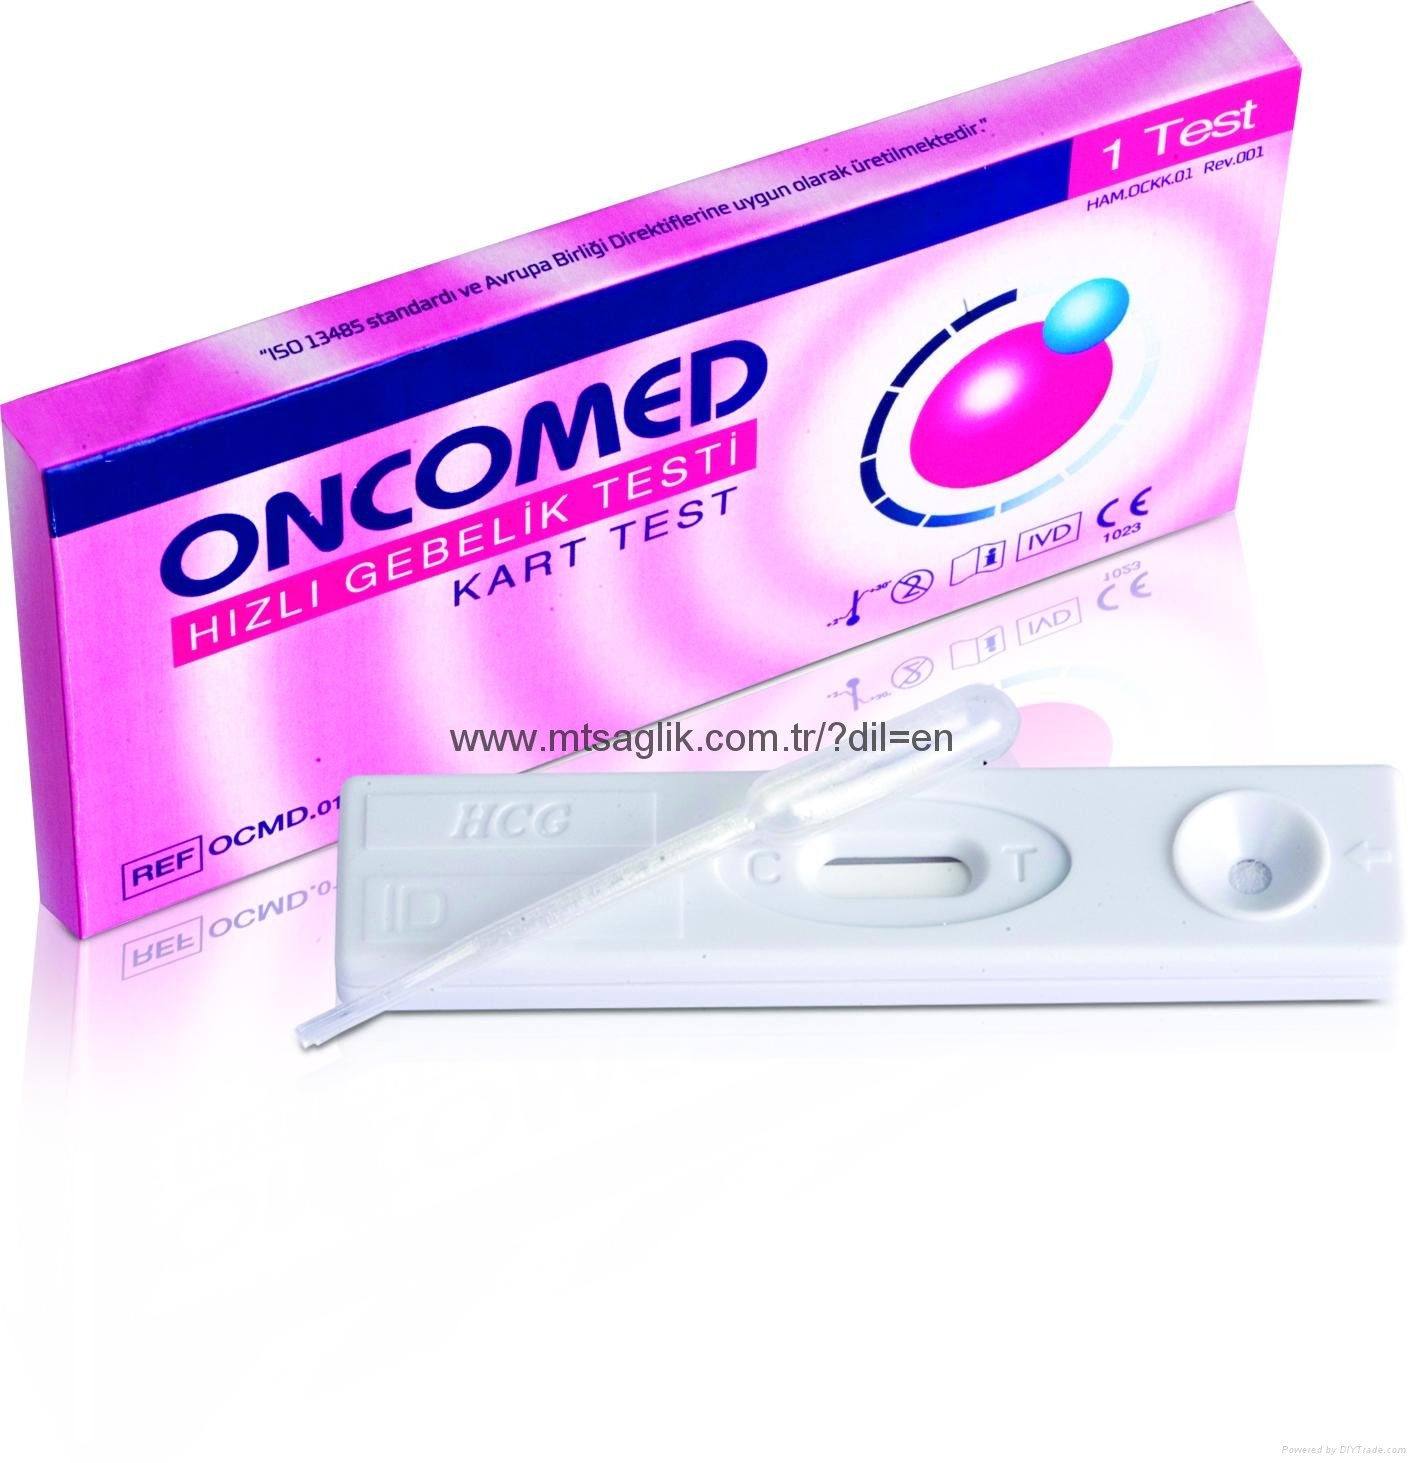 Test HCG - Pregnancy Test Card